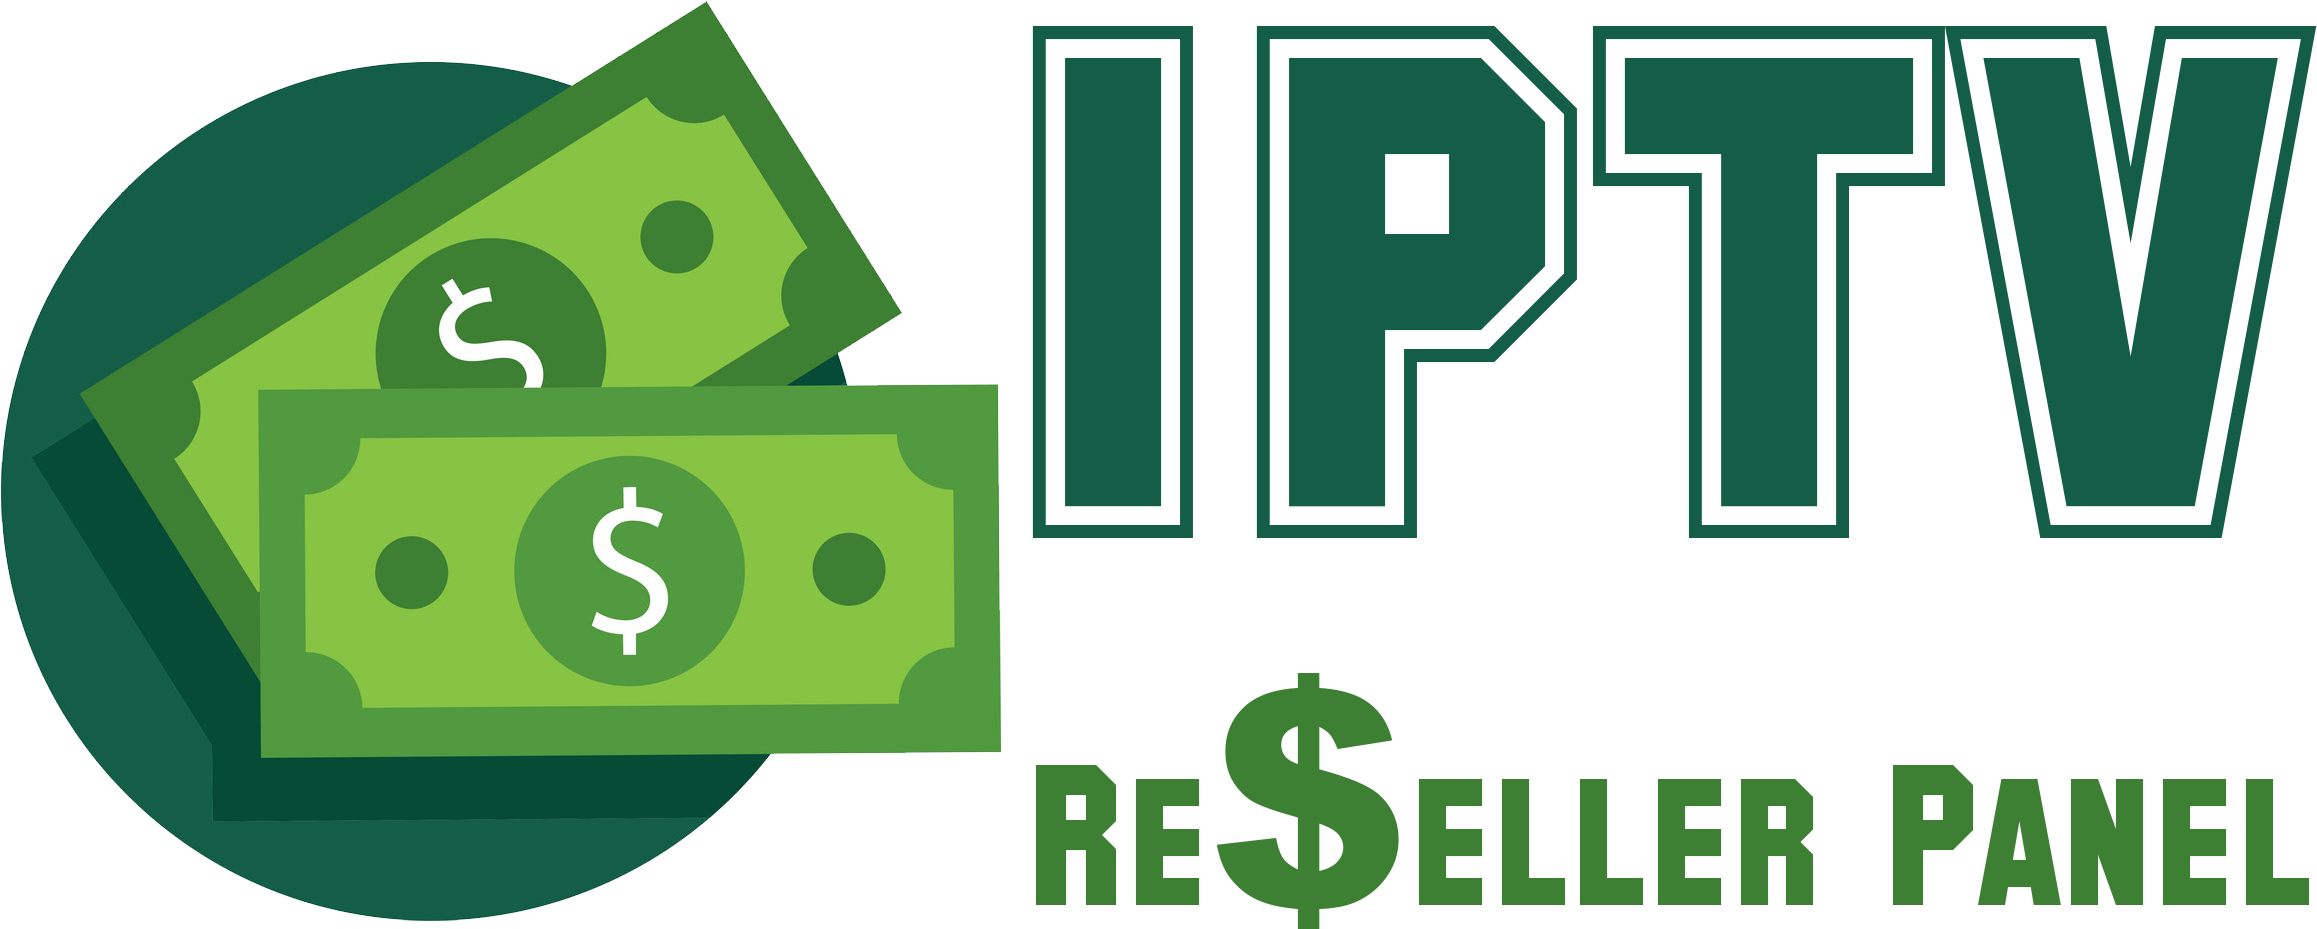 How to Become an IPTV Reseller - IPTV Reseller | BiGO IPTV | Extreme IPTV Reseller Panel